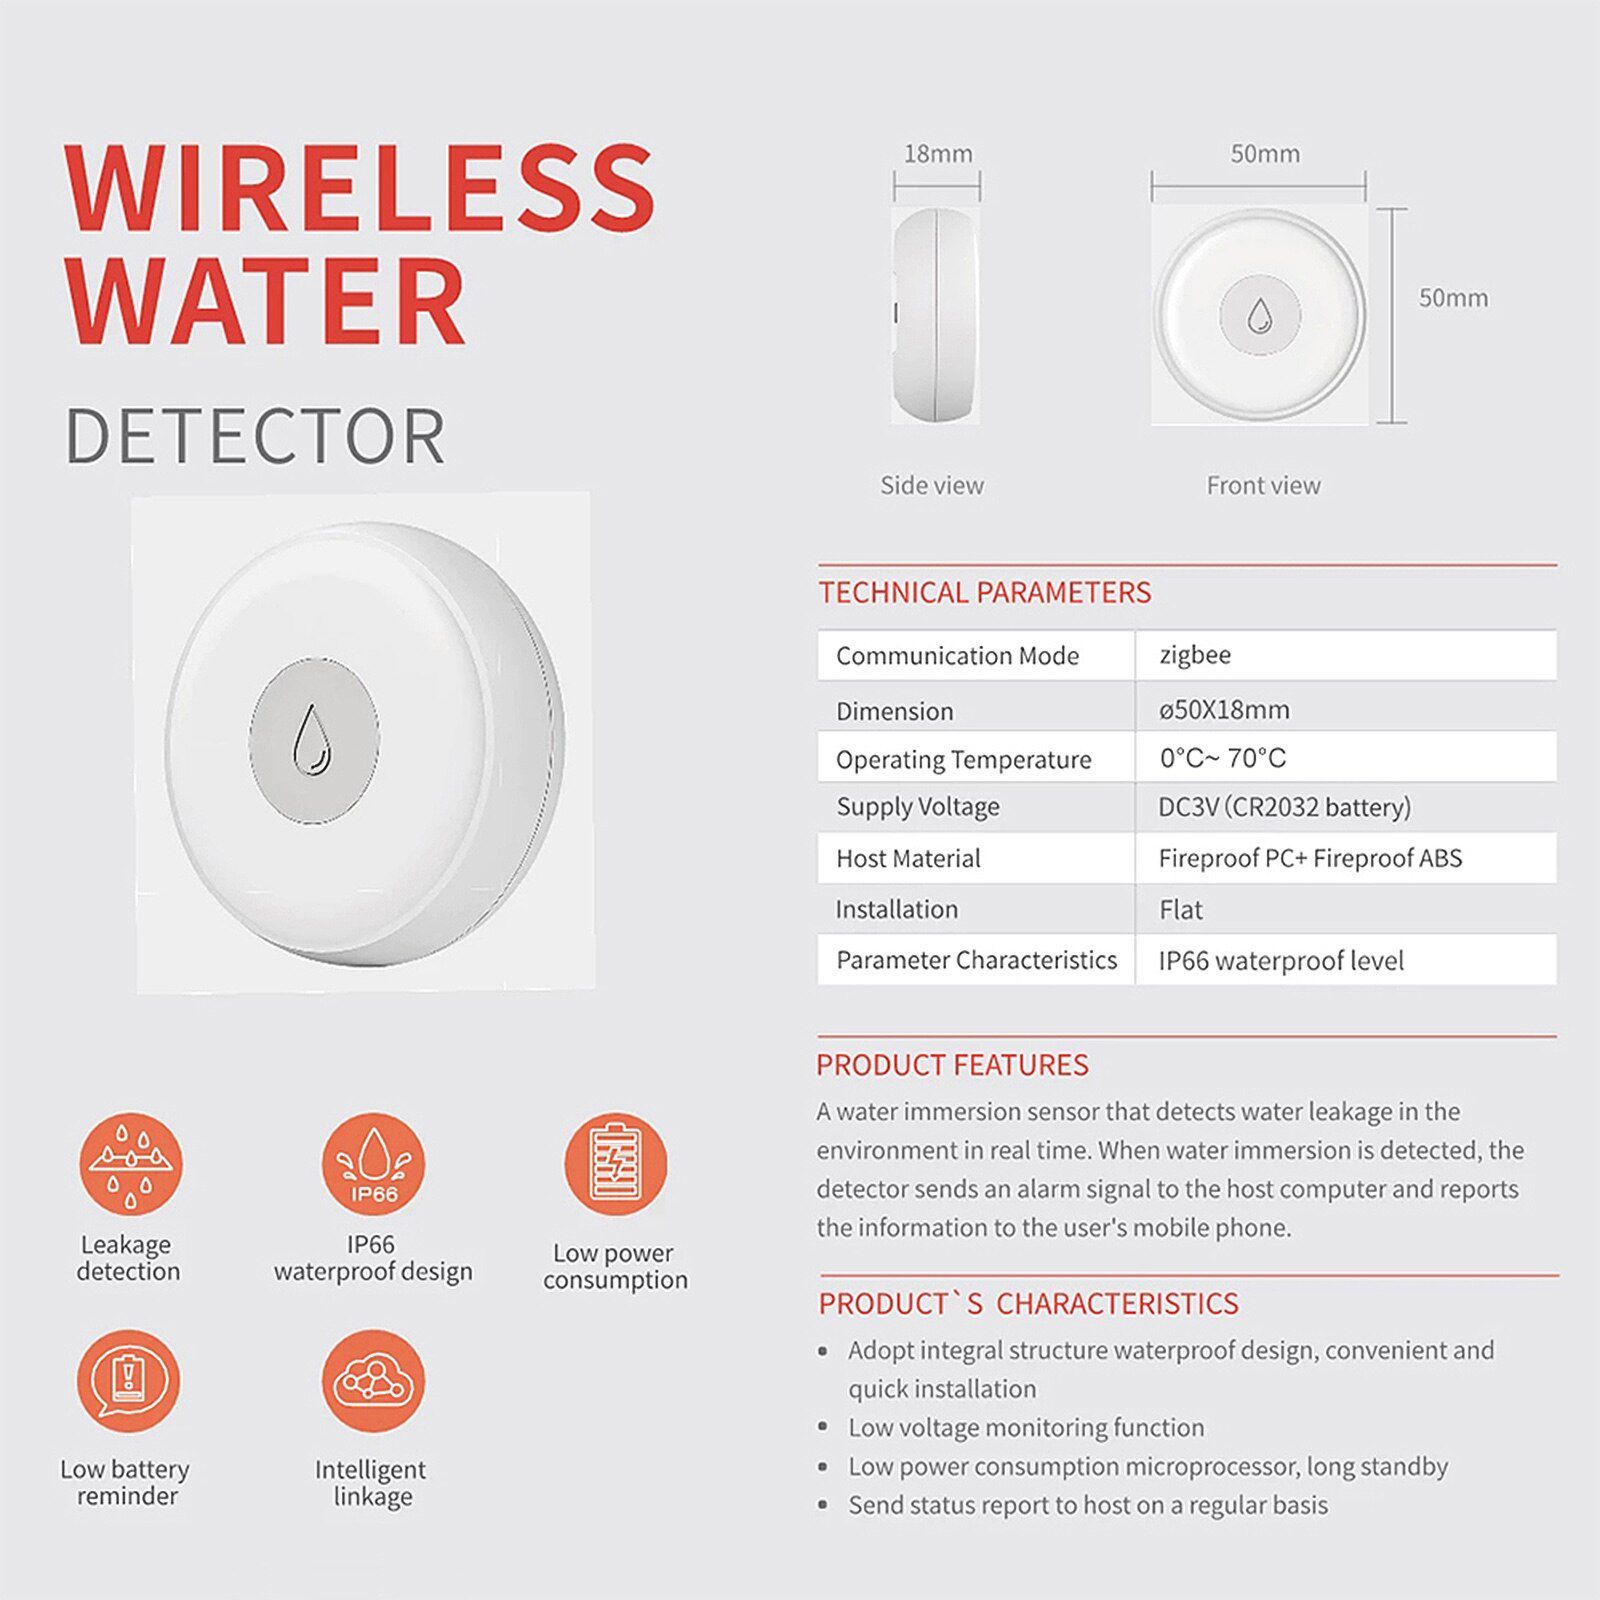 Smart Home Water Leak Sensor Wireless Flooding Detector Water Leakage Detection Alert Water Level Overflow Alarm eWelink